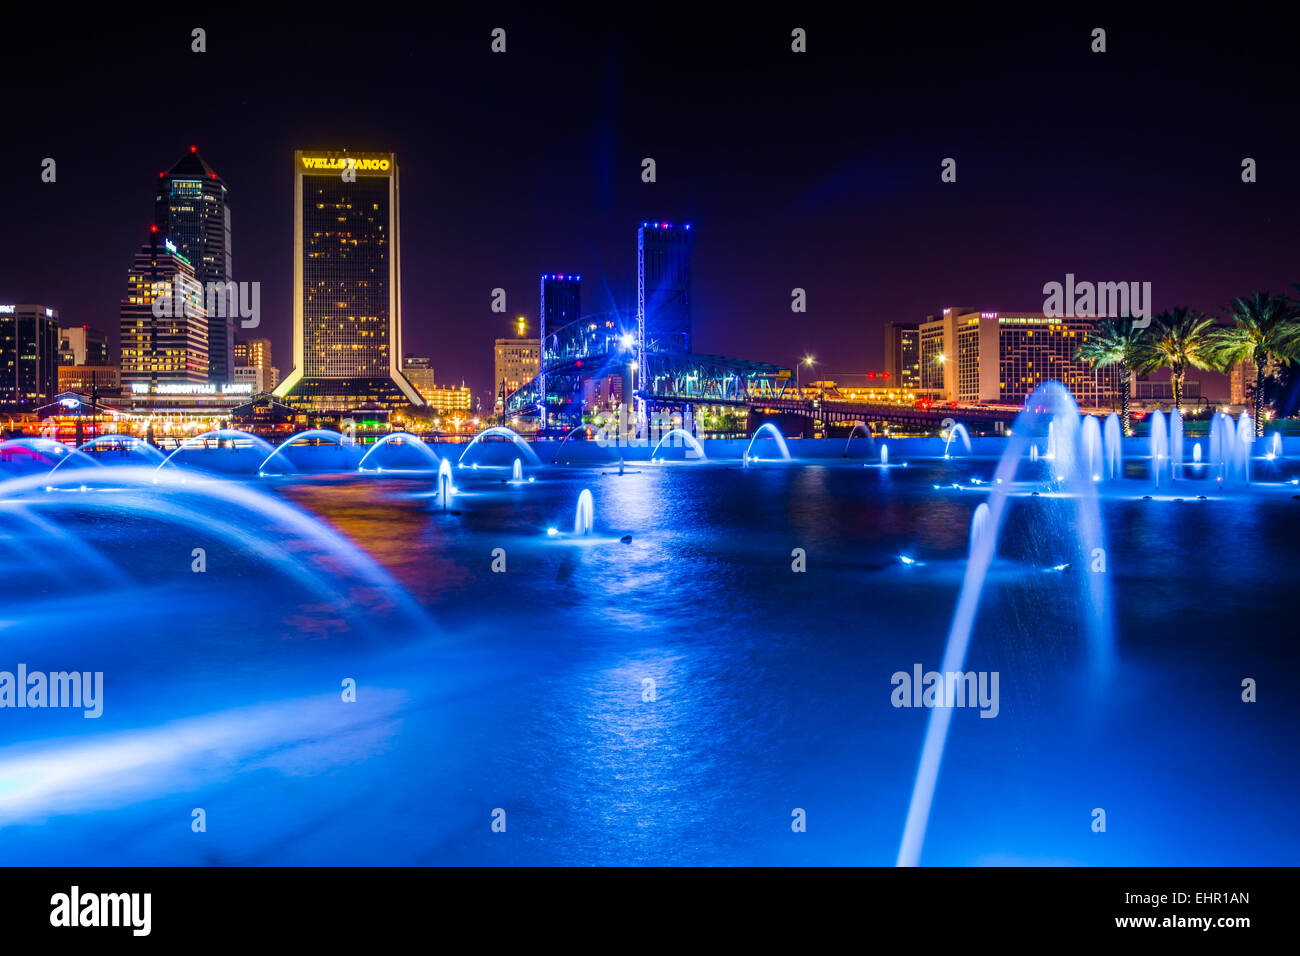 JACKSONVILLE, FLORIDA - JUNE 23: The Friendship Fountains and Jacksonville skyline at night on June 23, 2014 in Jacksonville, Fl Stock Photo